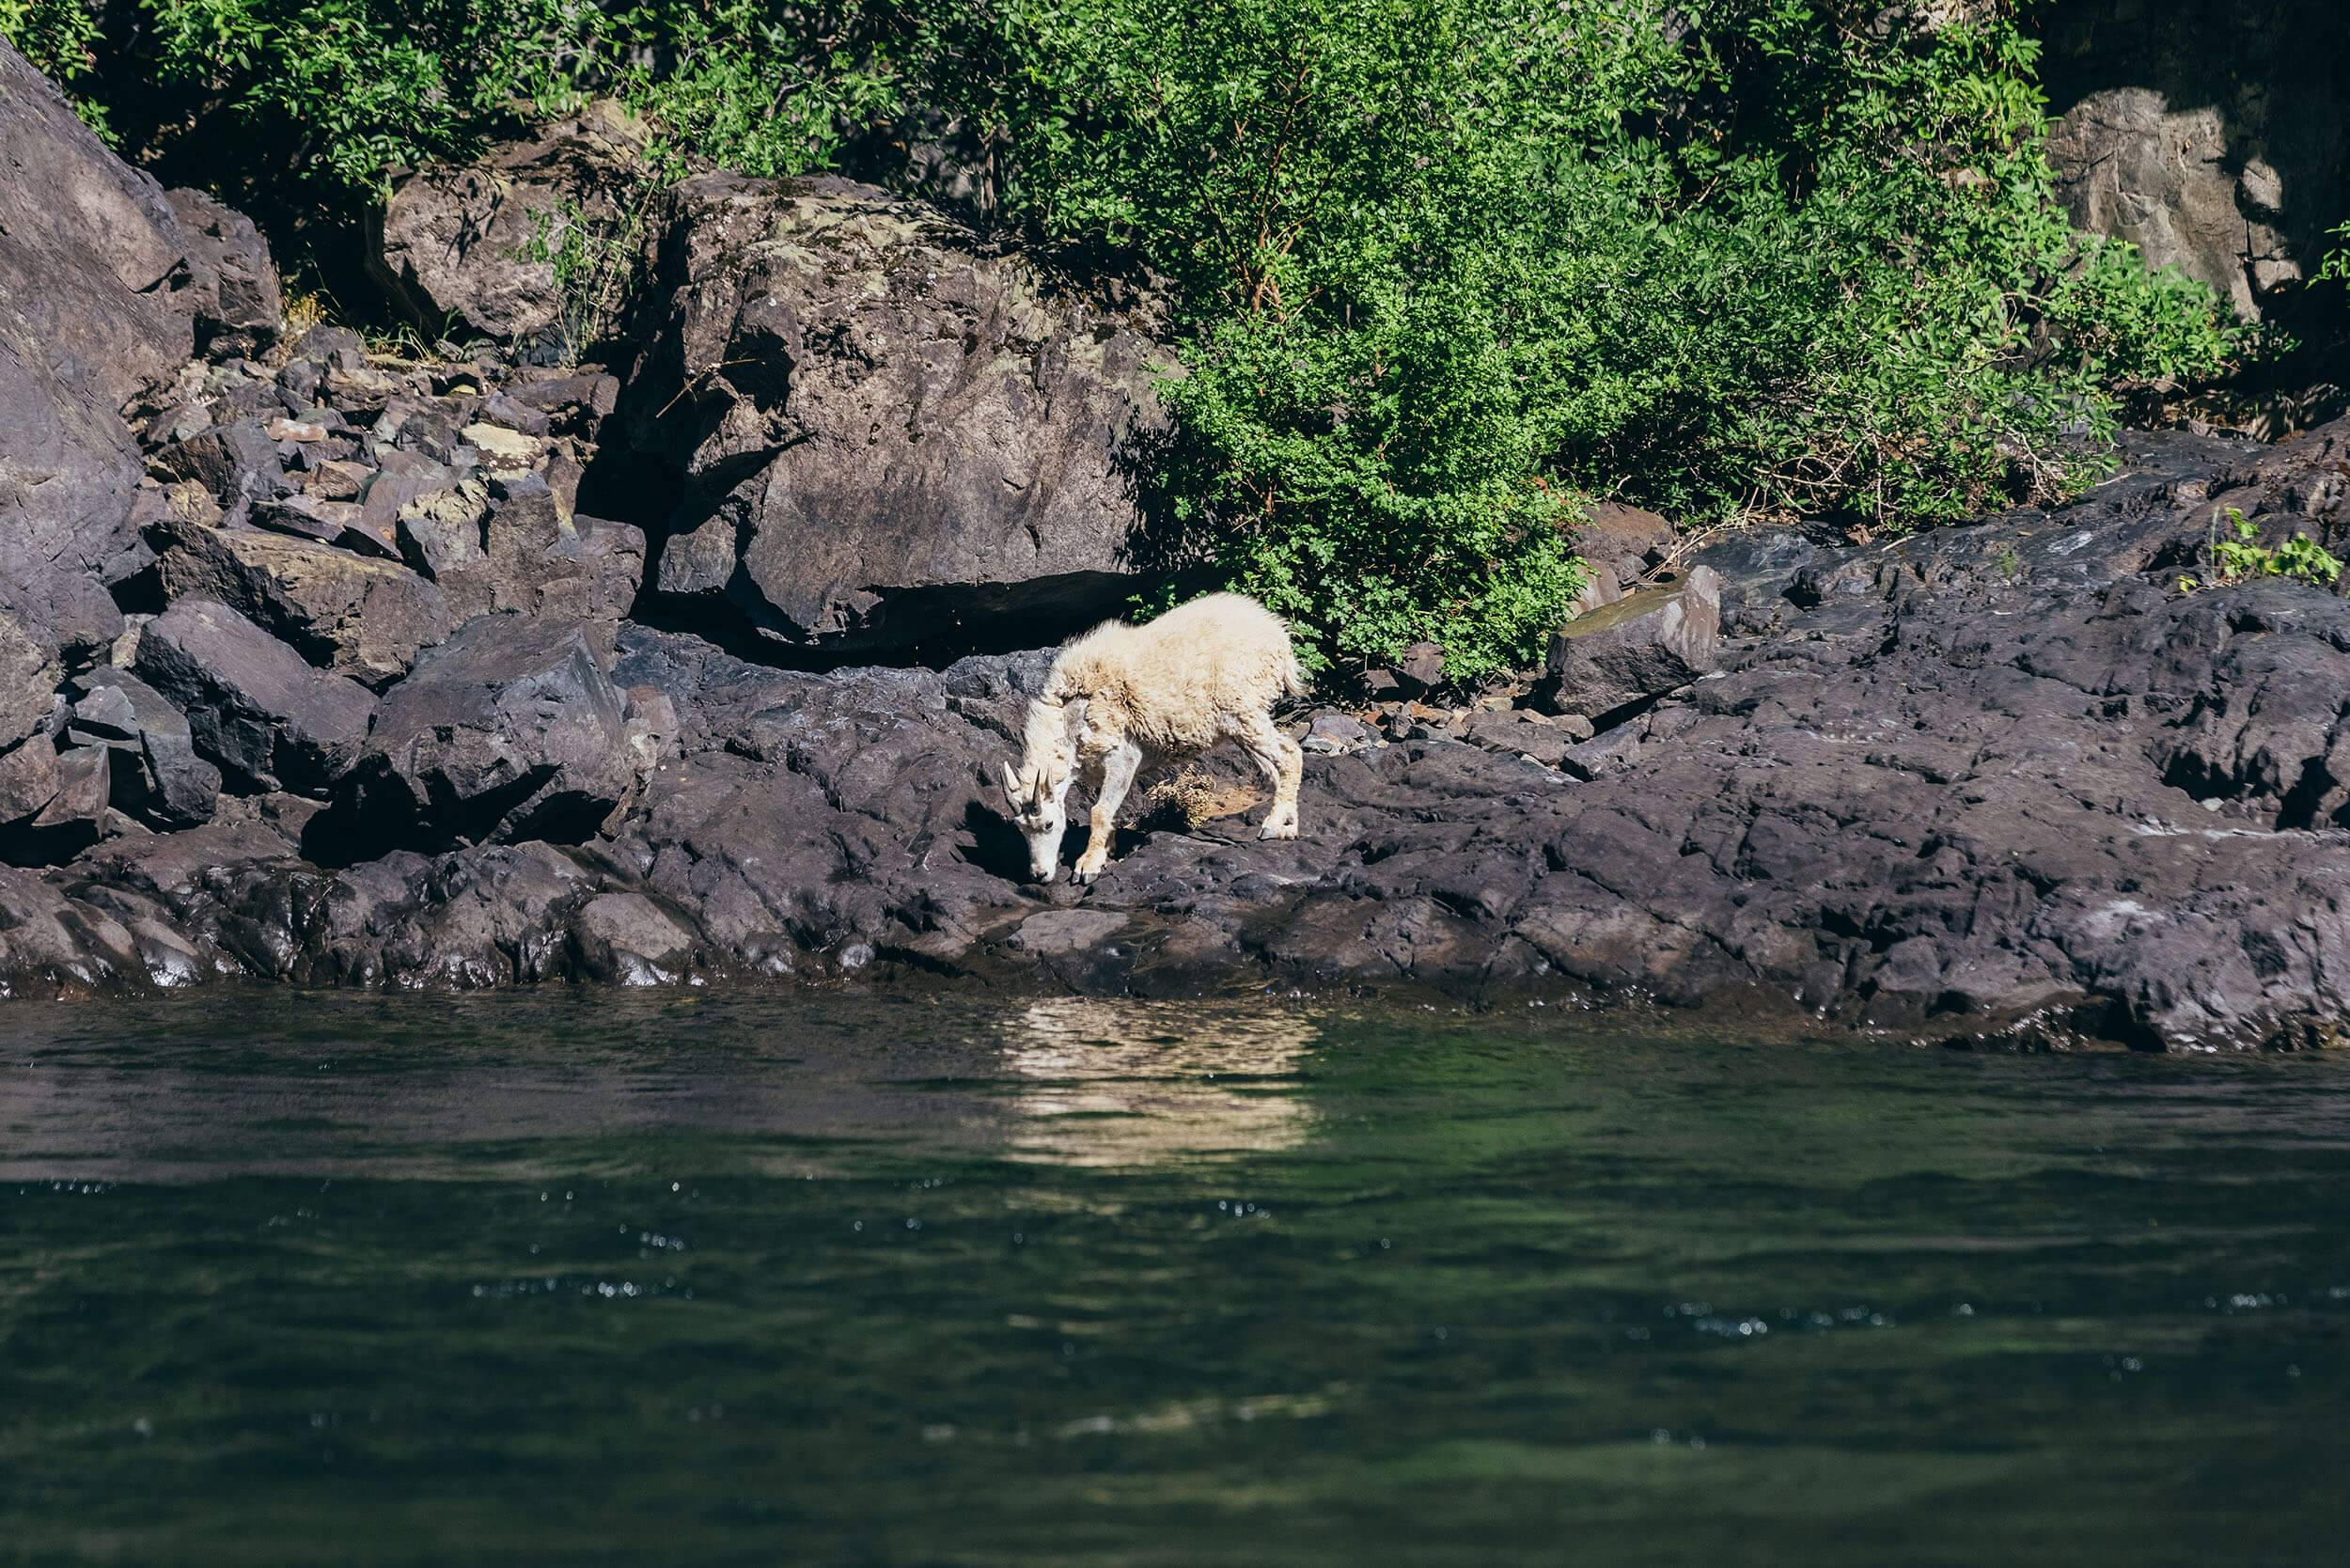 a bighorn sheep standing on rocks beside a river